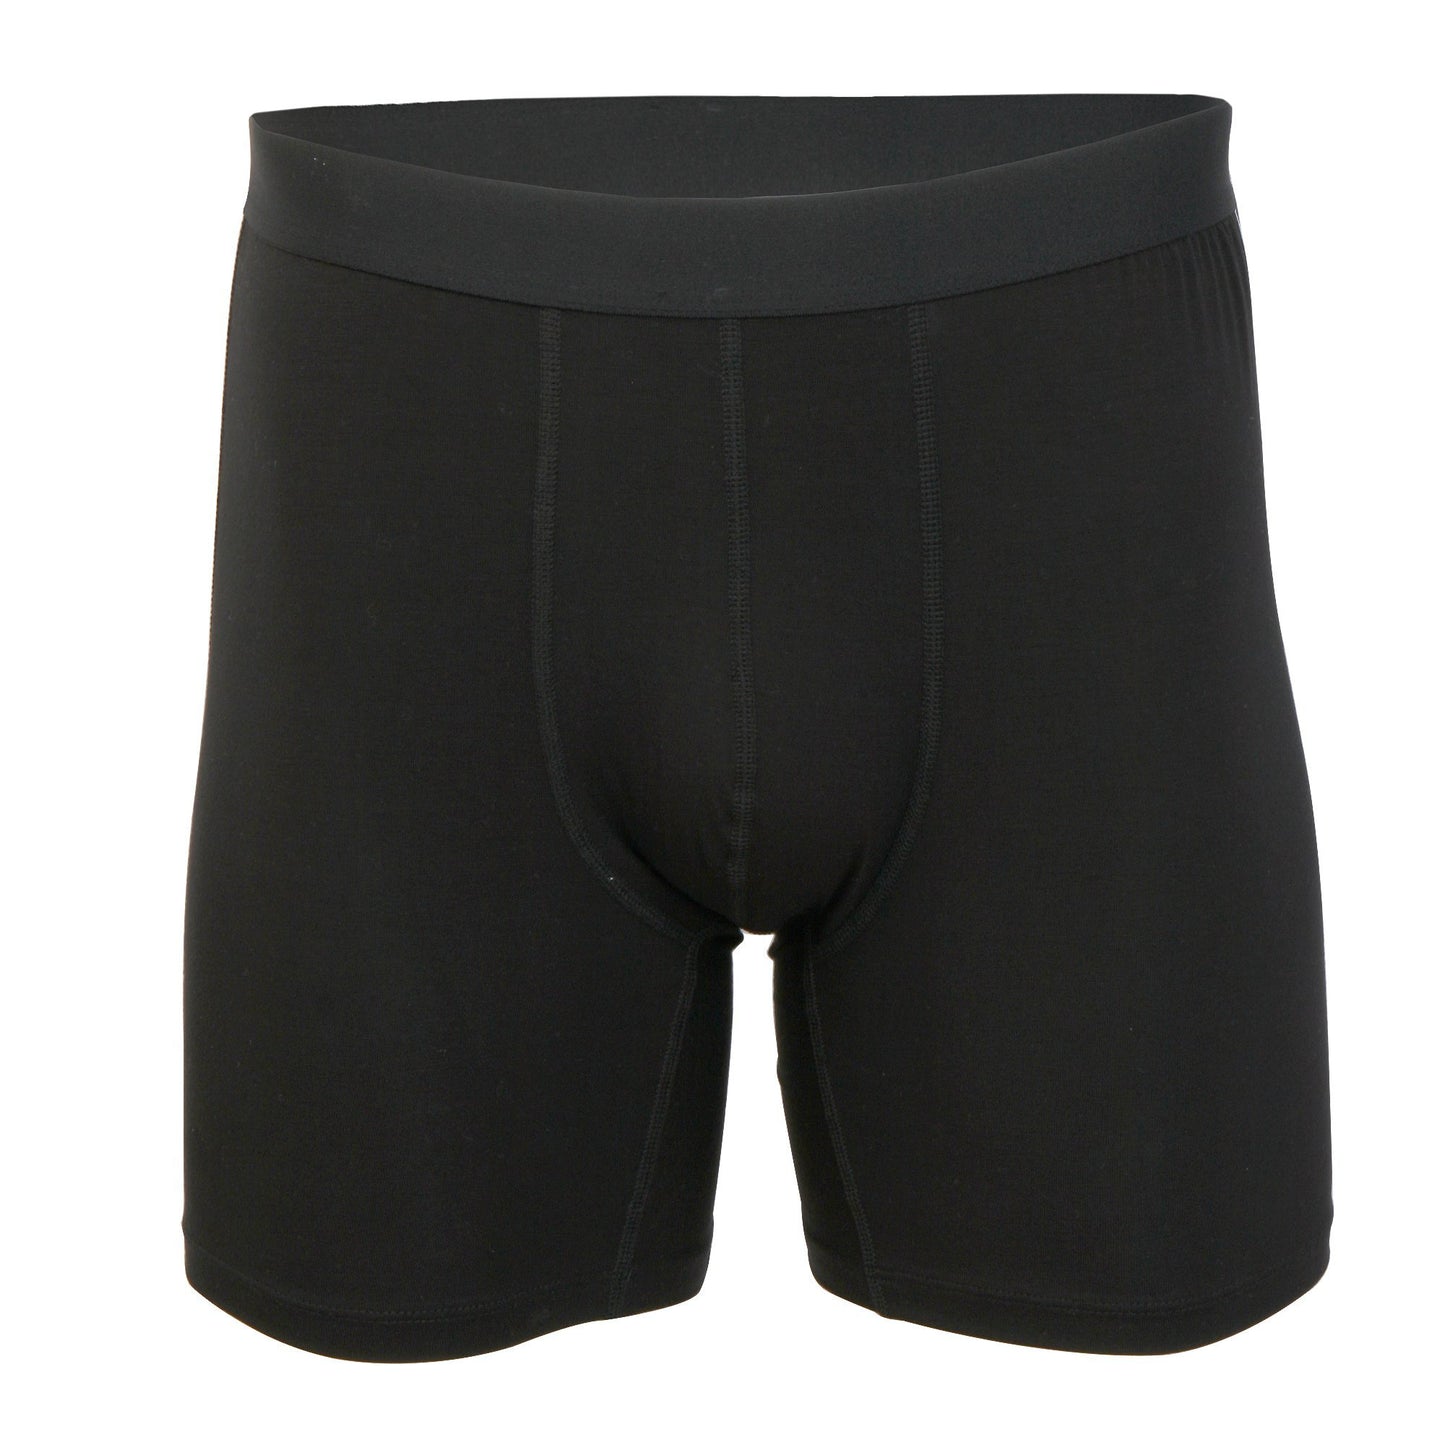 Na Underwear] Men's Boxer Shorts New York Brand